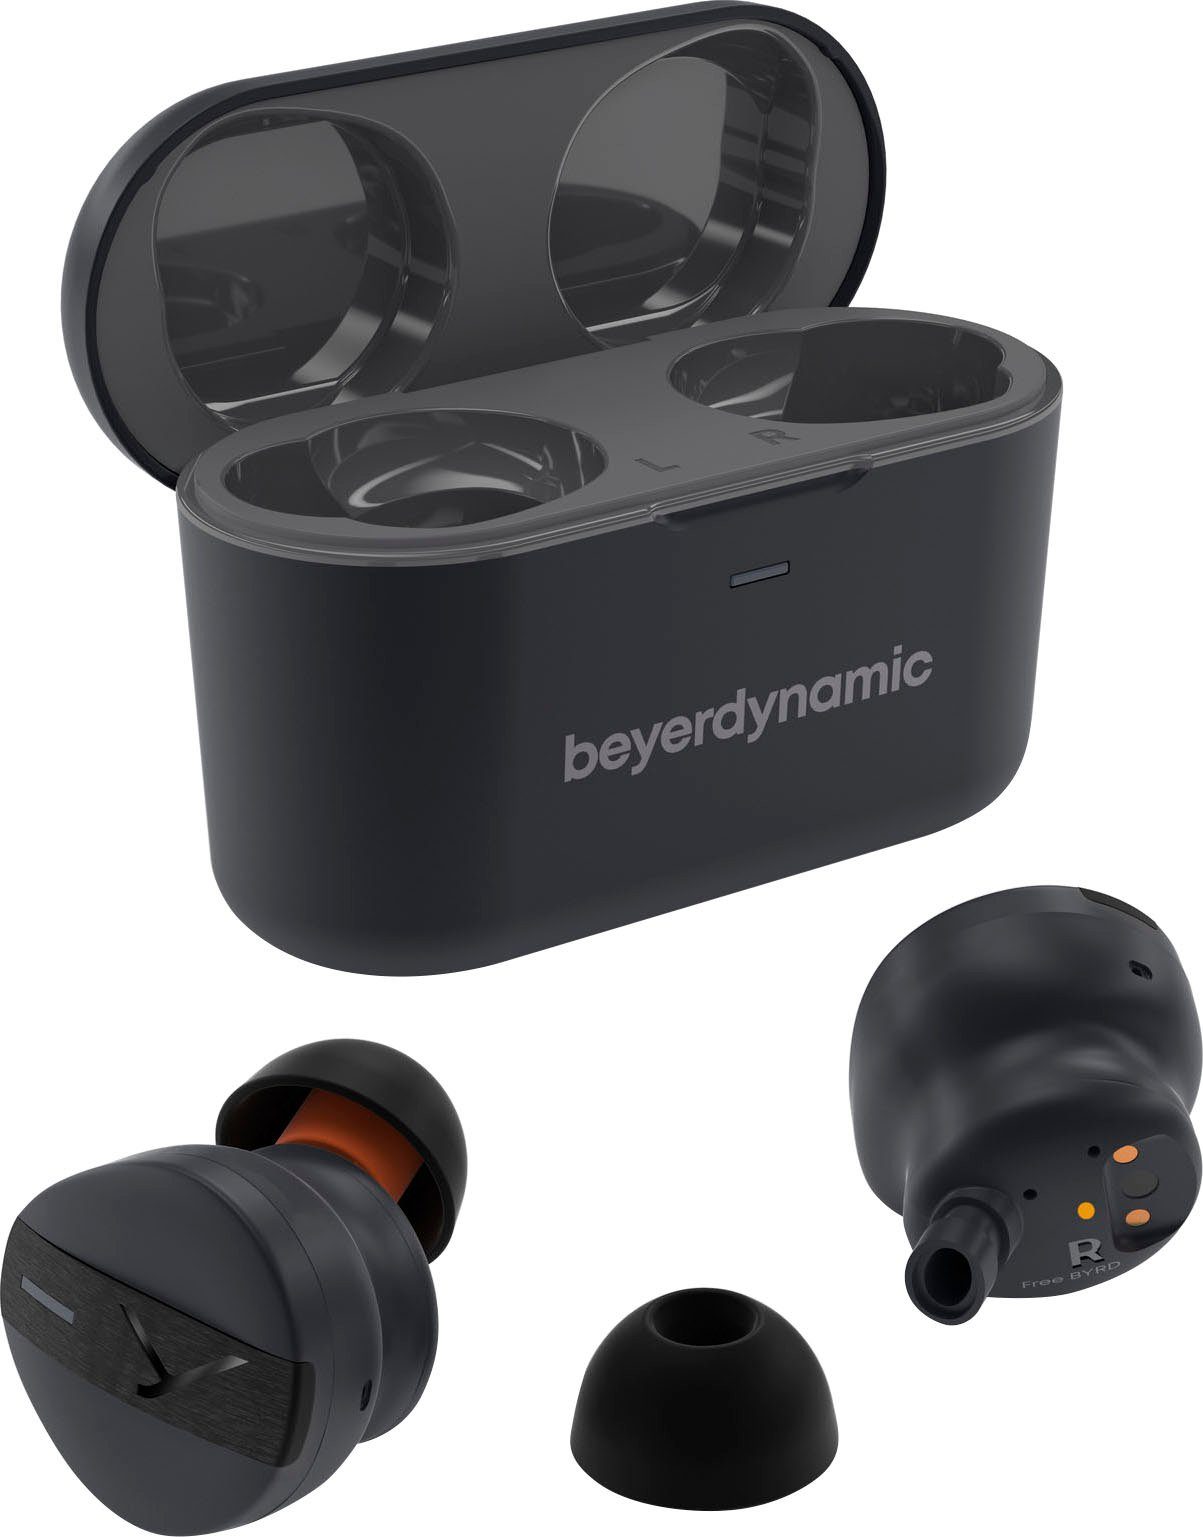 wireless beyerdynamic In-Ear-Kopfhörer BYRD (Sprachsteuerung) Free